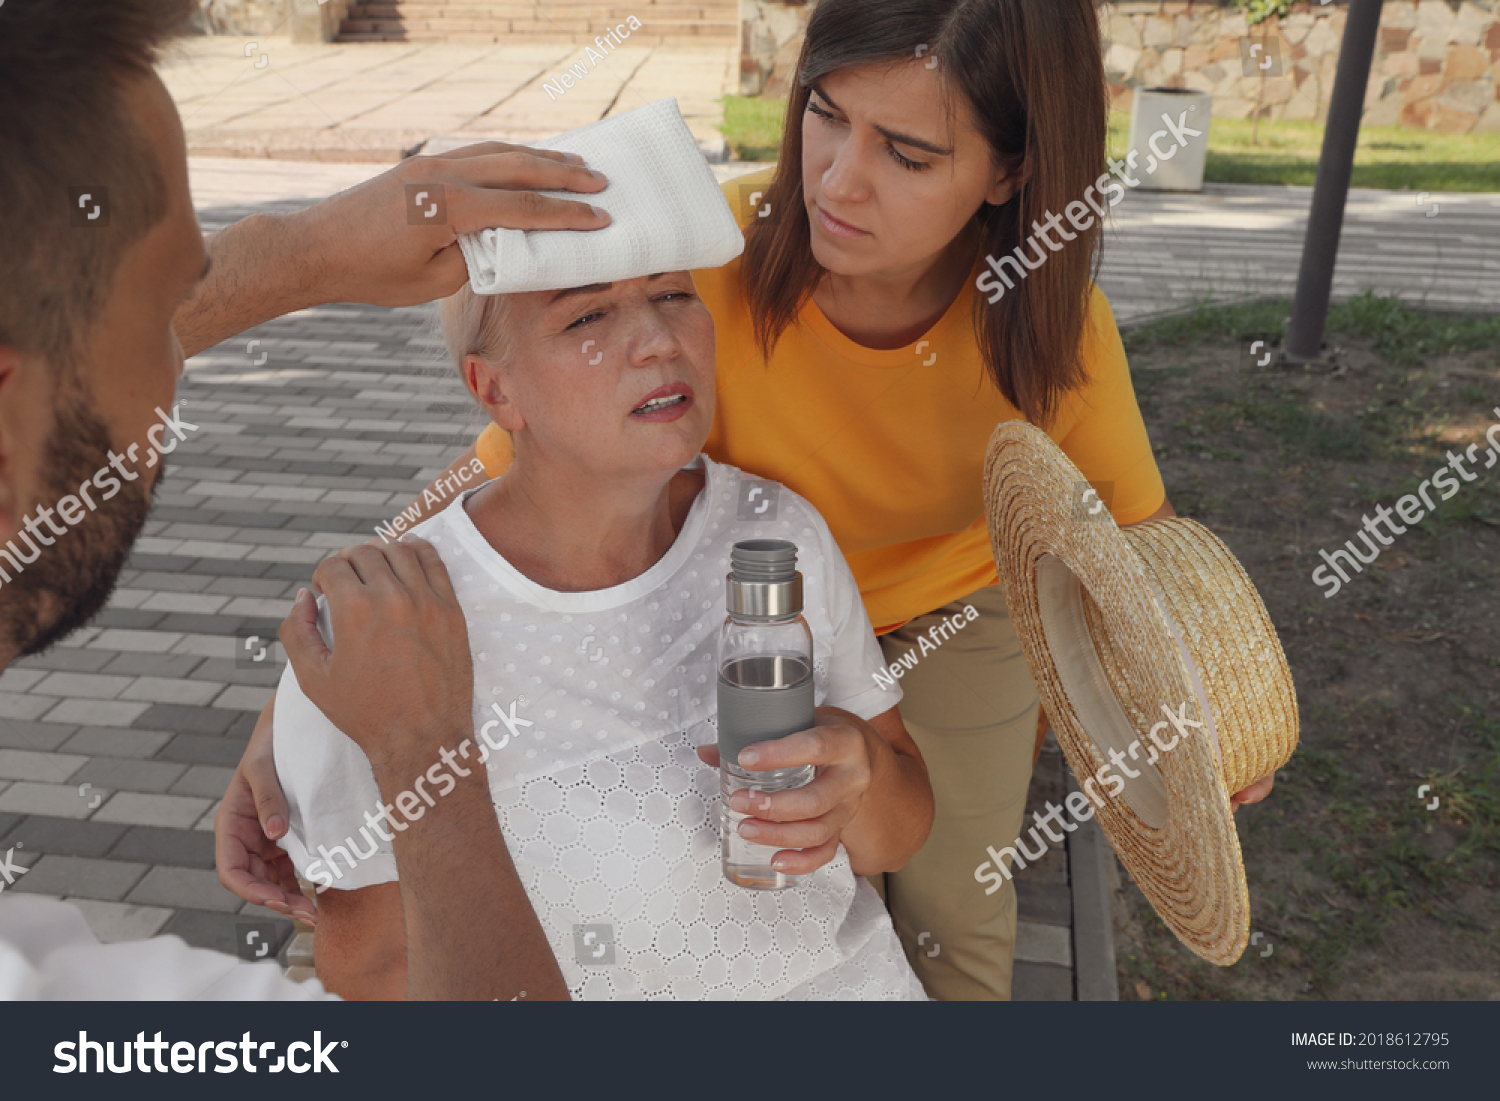 People helping mature woman on city street. Suffering from heat stroke #2018612795